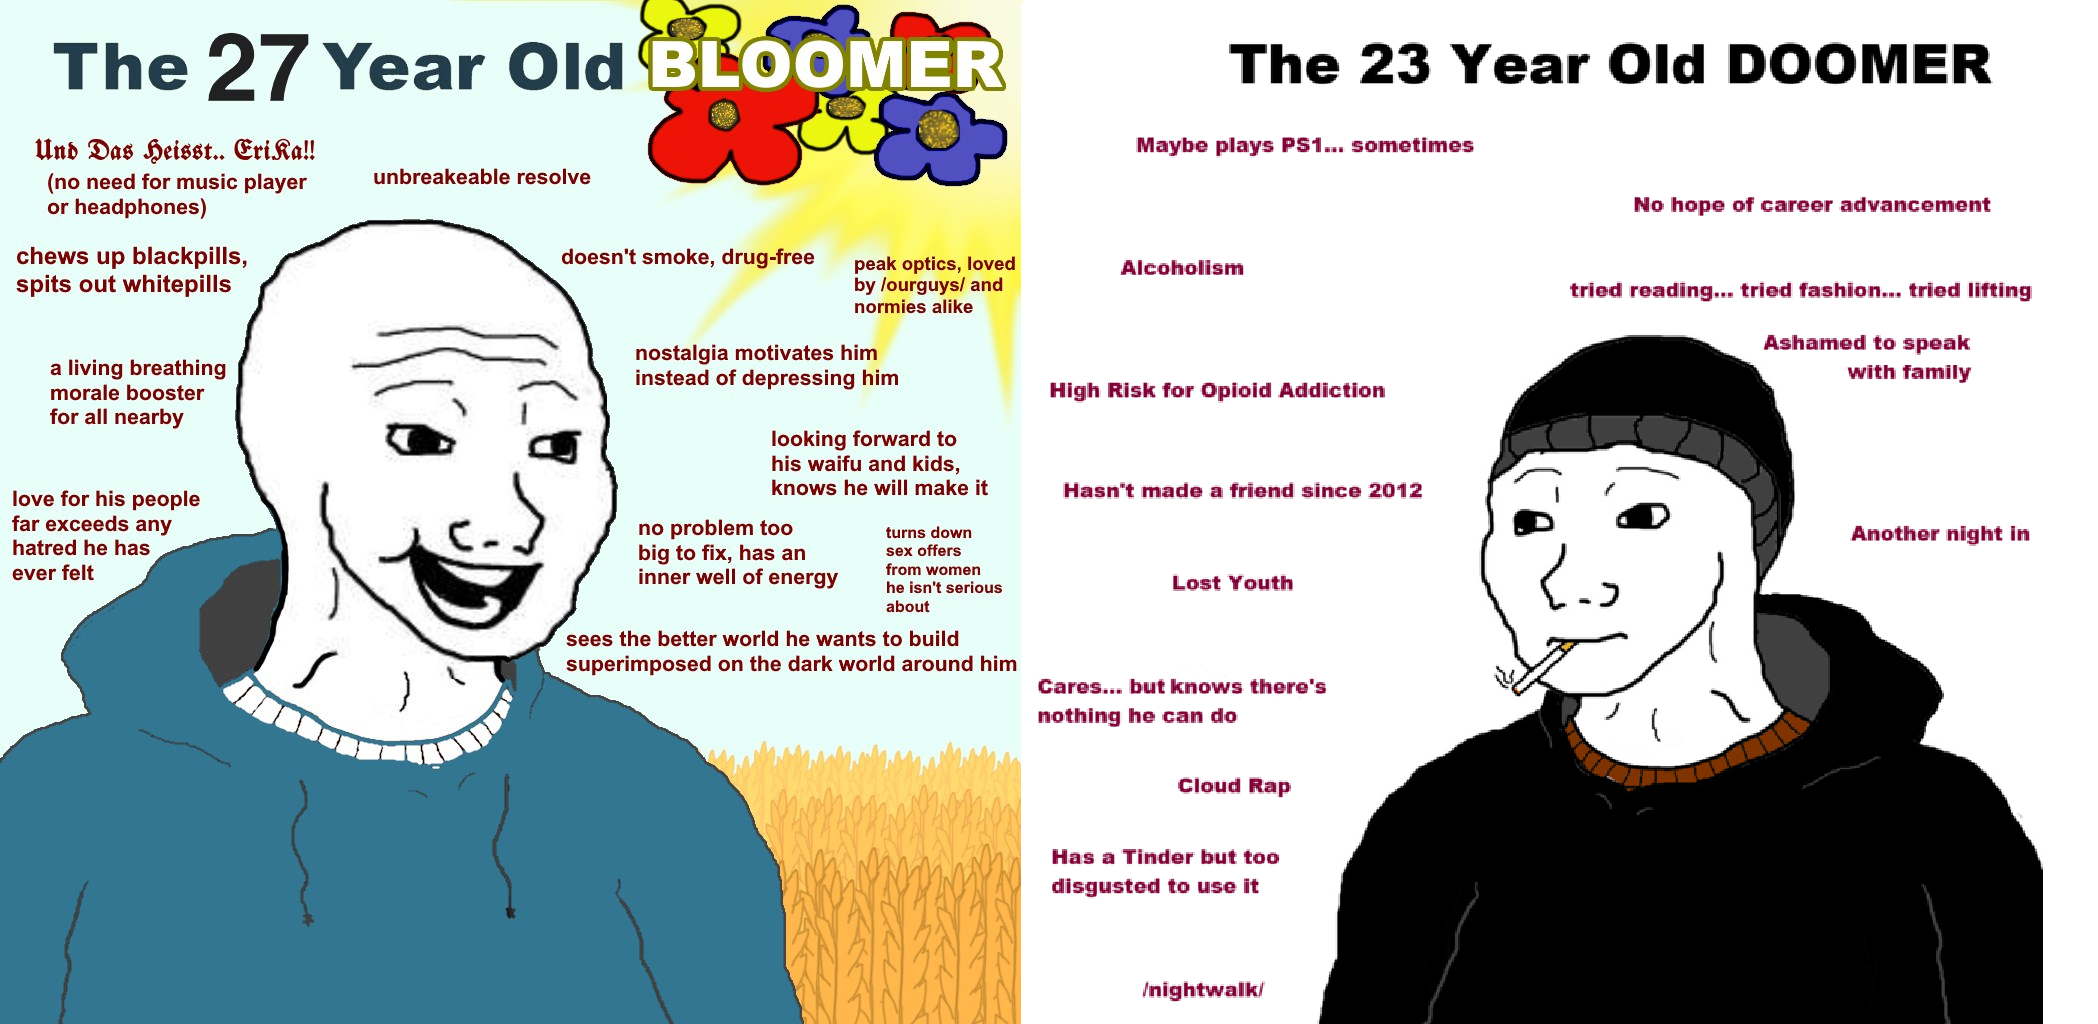 Tiedosto:Bloomer-doomer.png